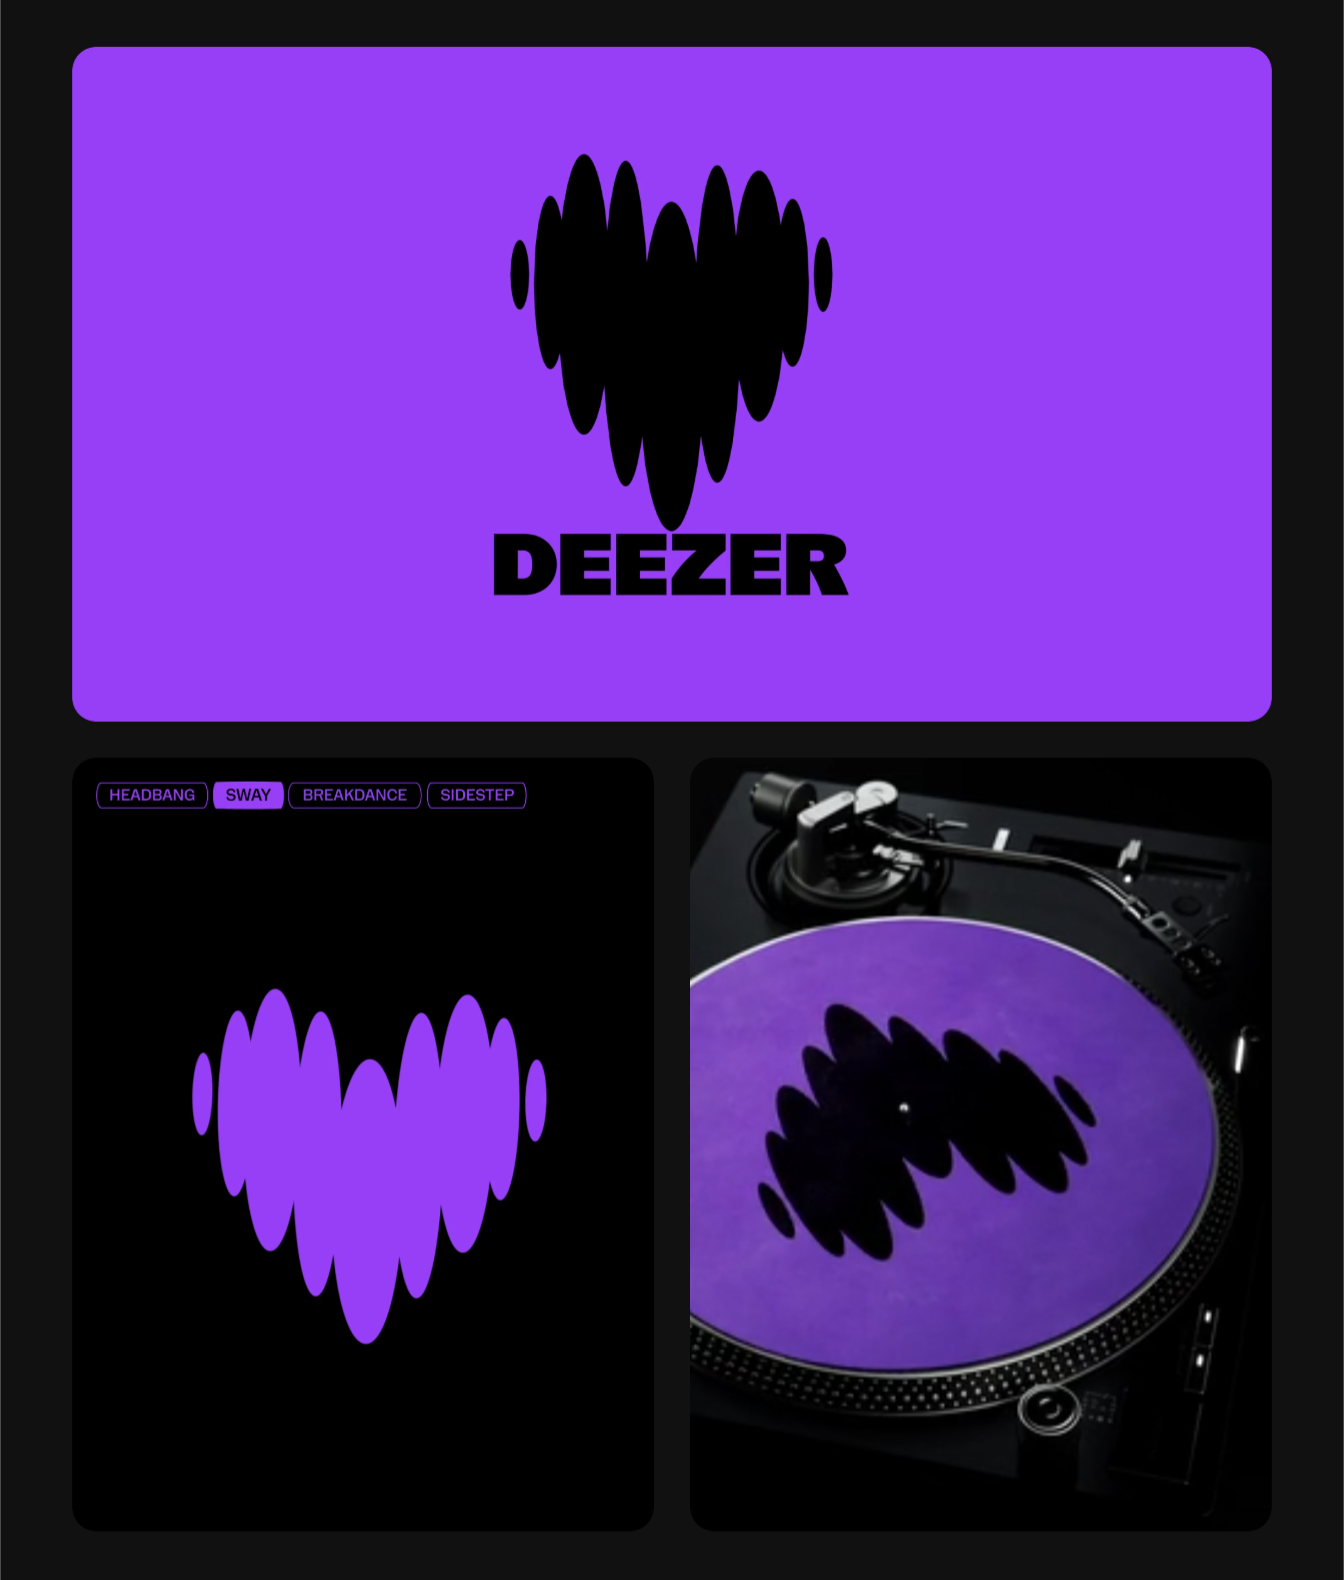 deezer sans font 2024 brand identity design 2